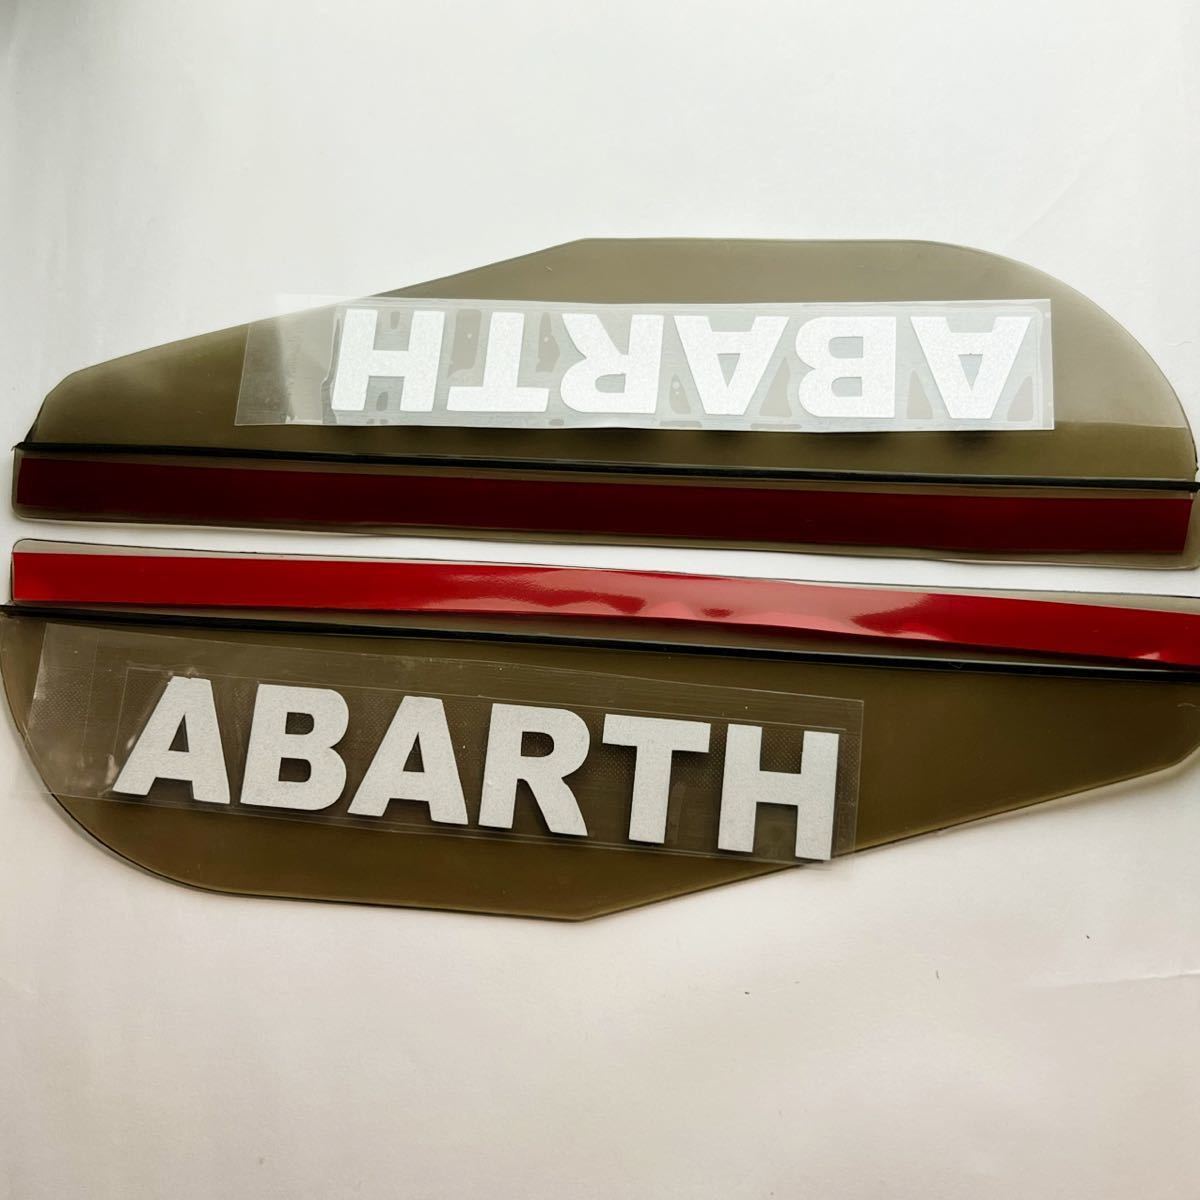  abarth door mirror visor smoked 